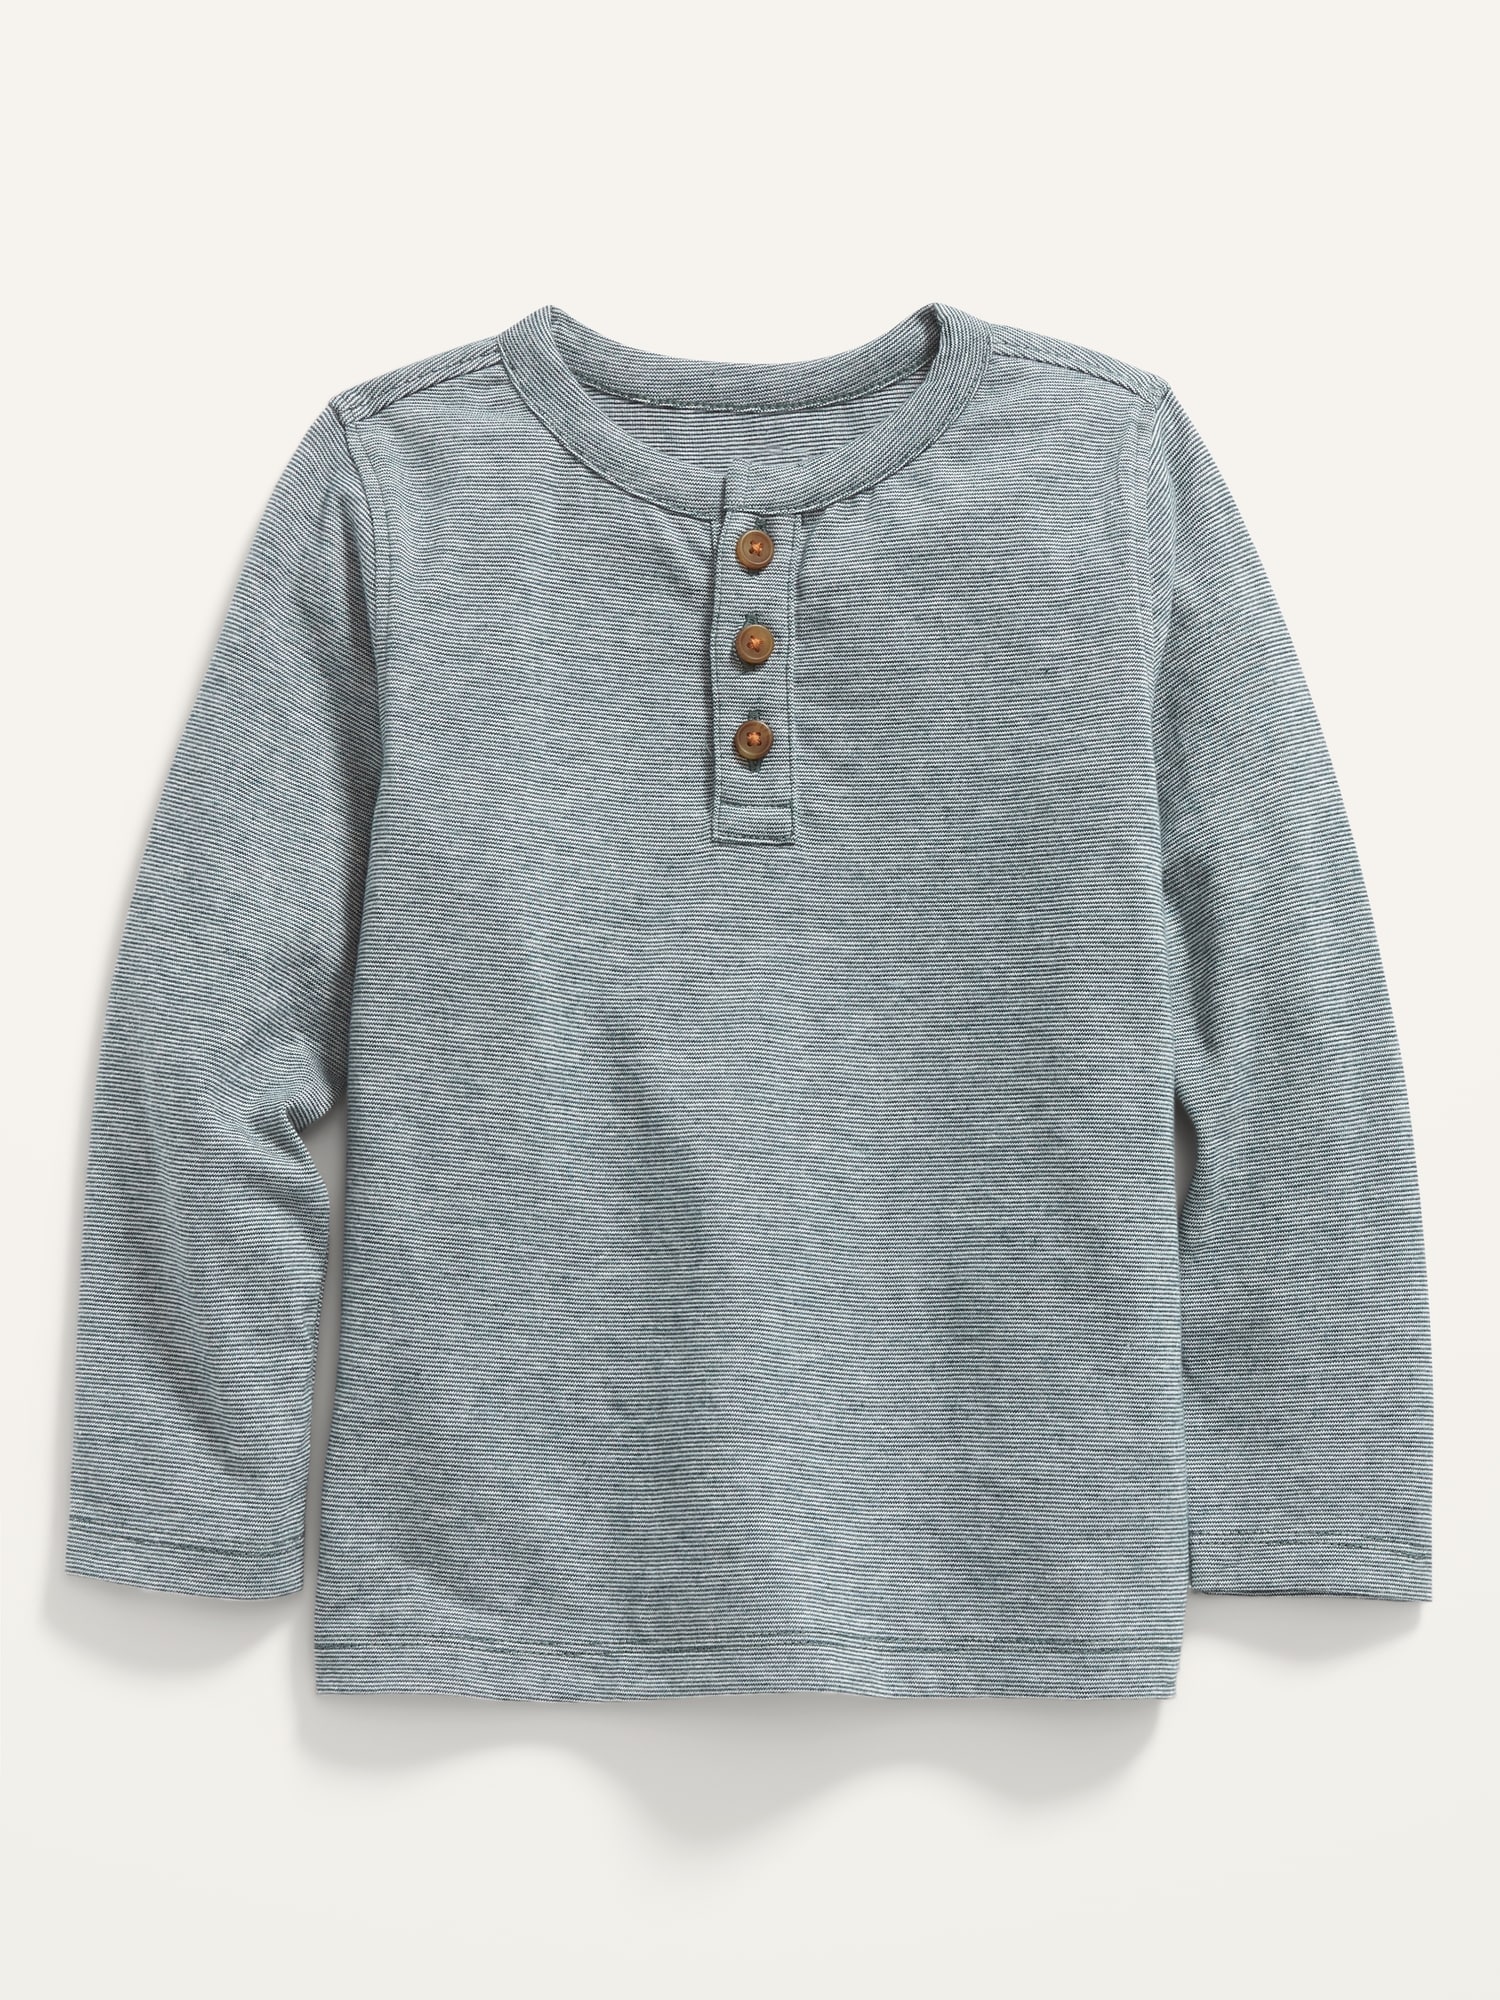 Unisex Long-Sleeve Henley T-Shirt for Toddler | Old Navy